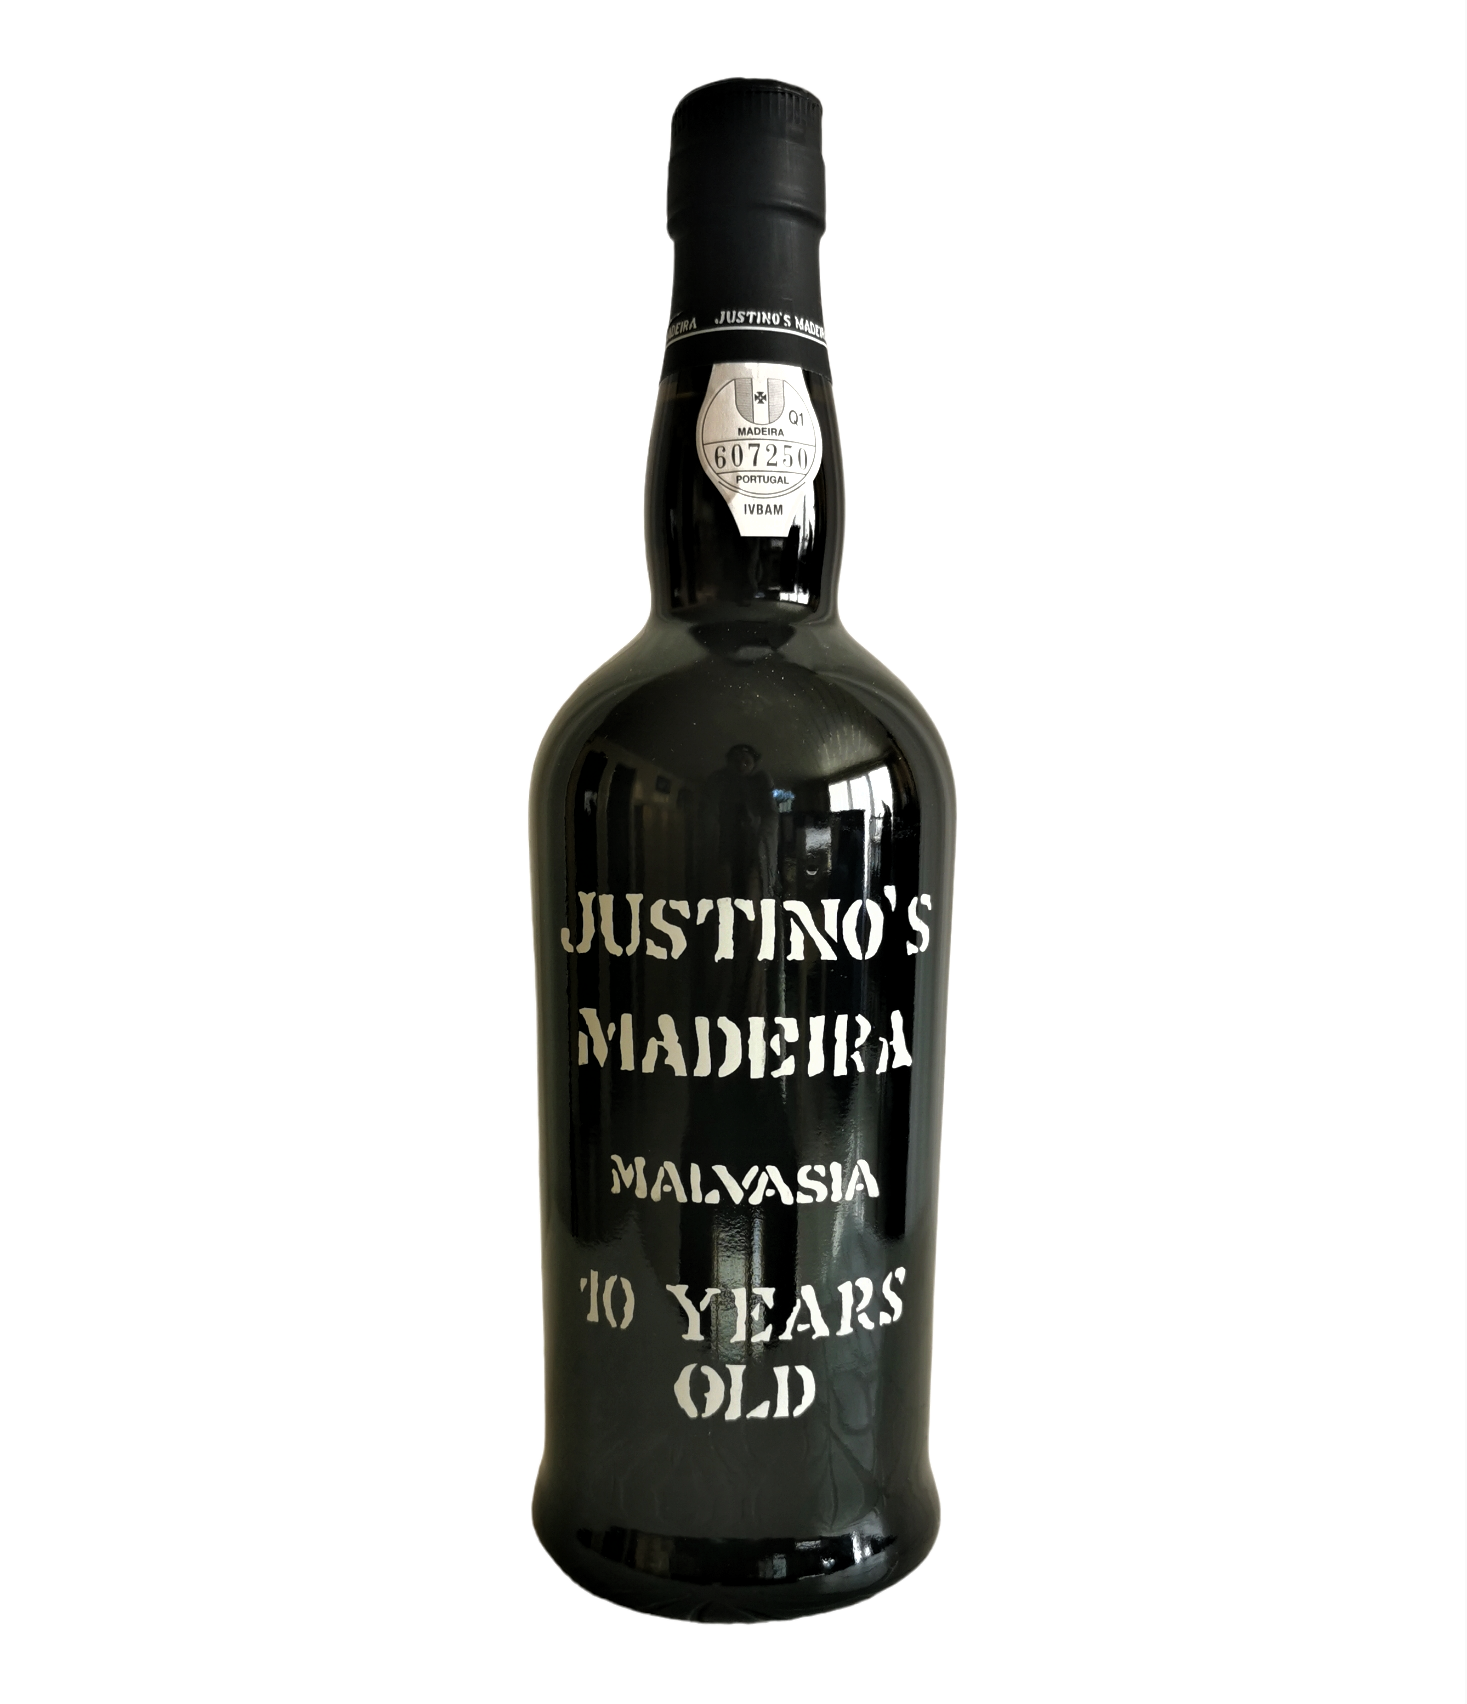 Justino's Madeira Malvasia 10Y sweet 19% 75cl